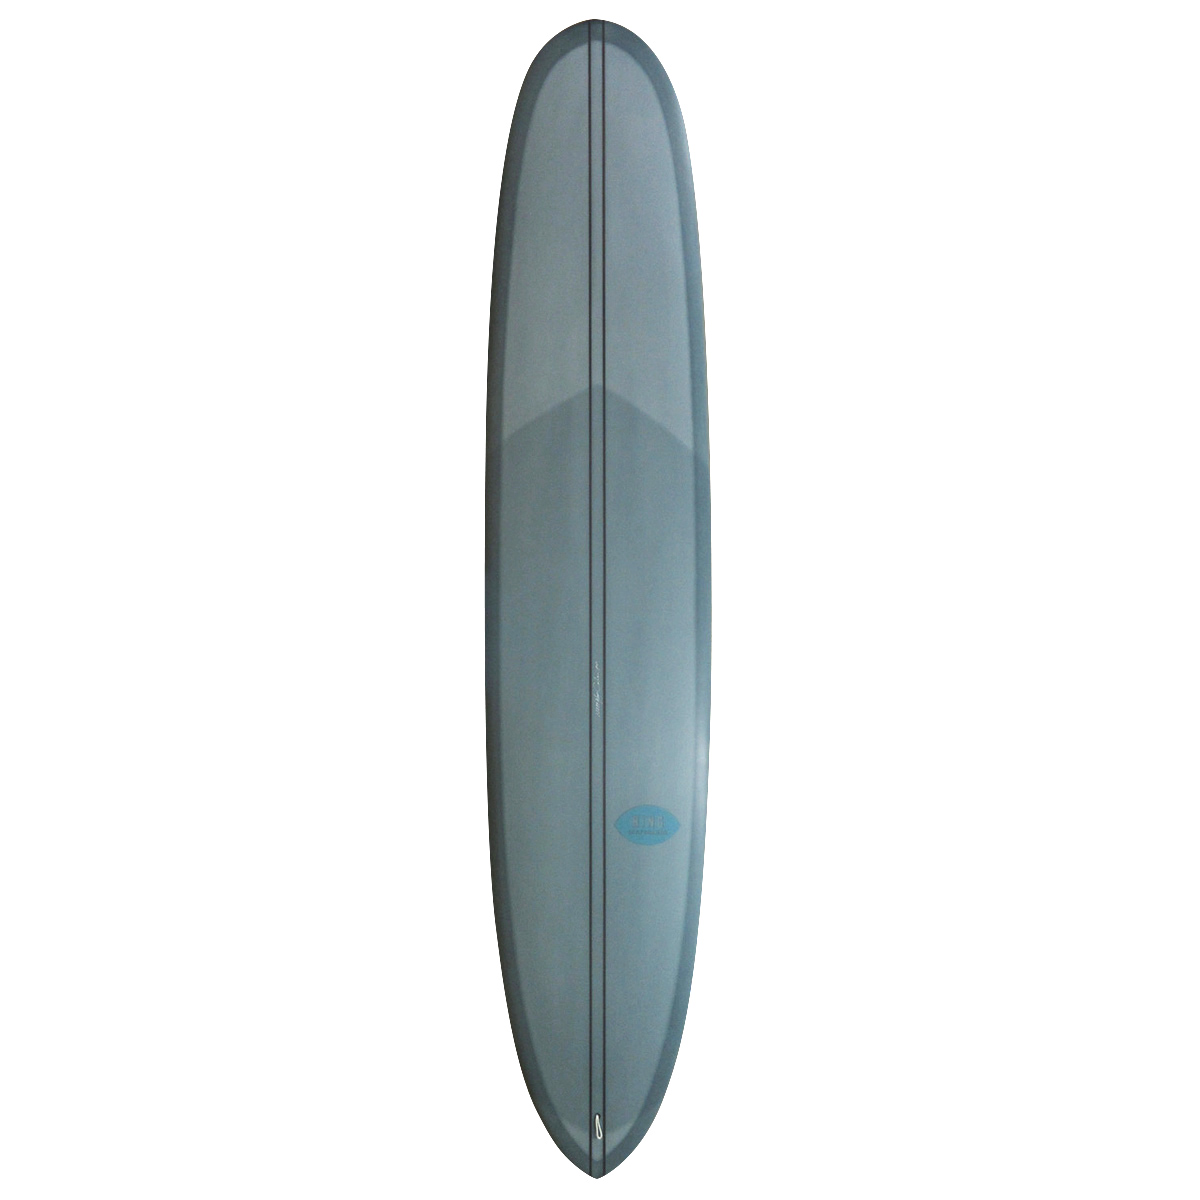 BING SURFBOARDS : California Pintail 9'4"